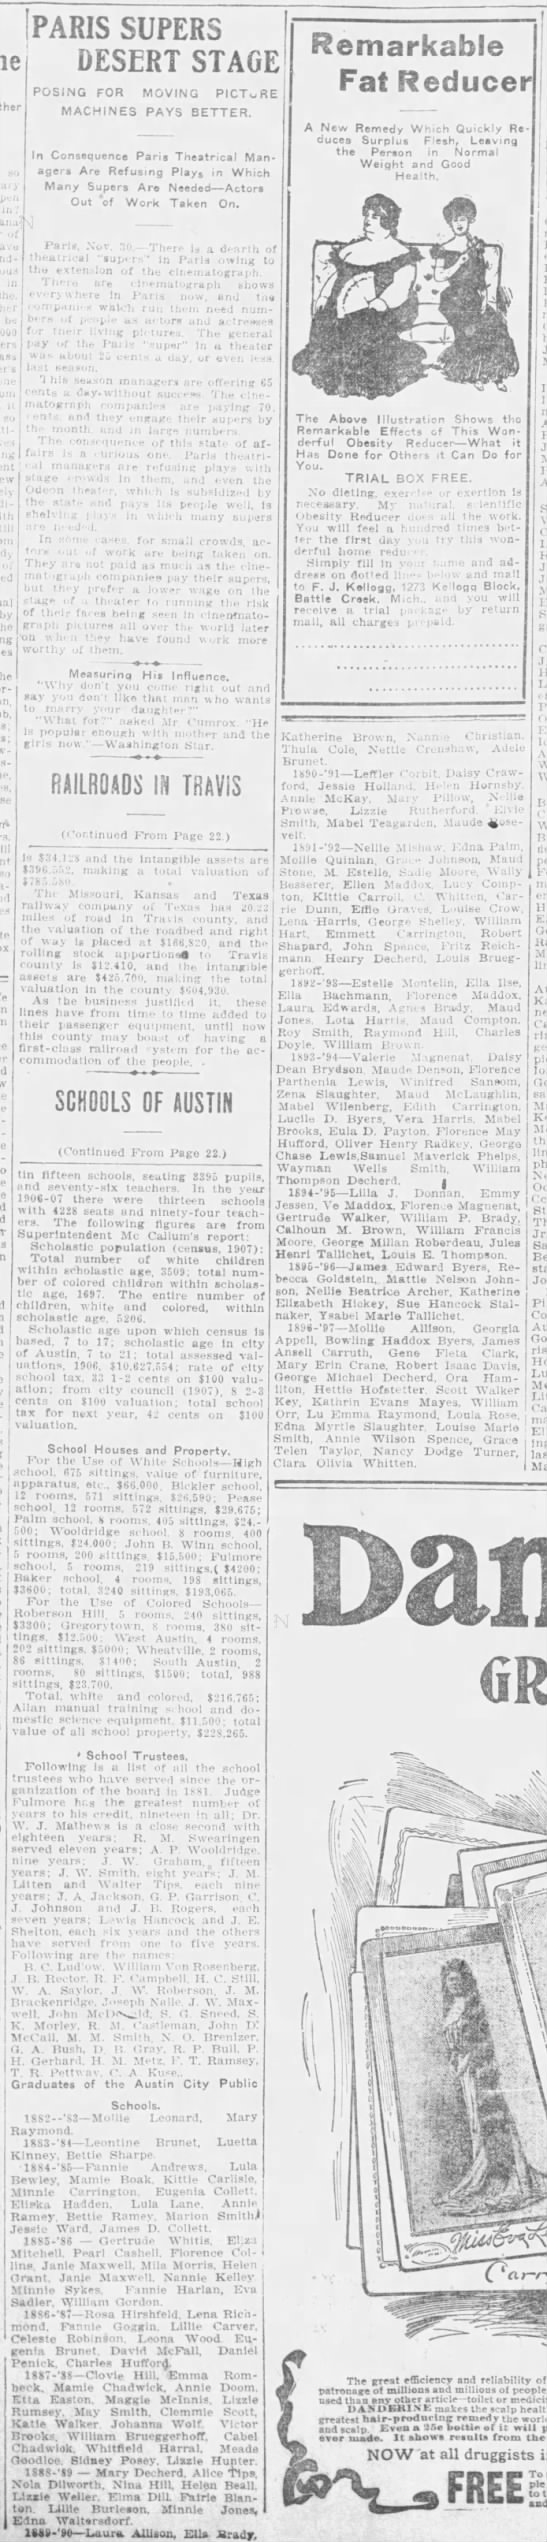 Schools of Austin, pt. 2 - 